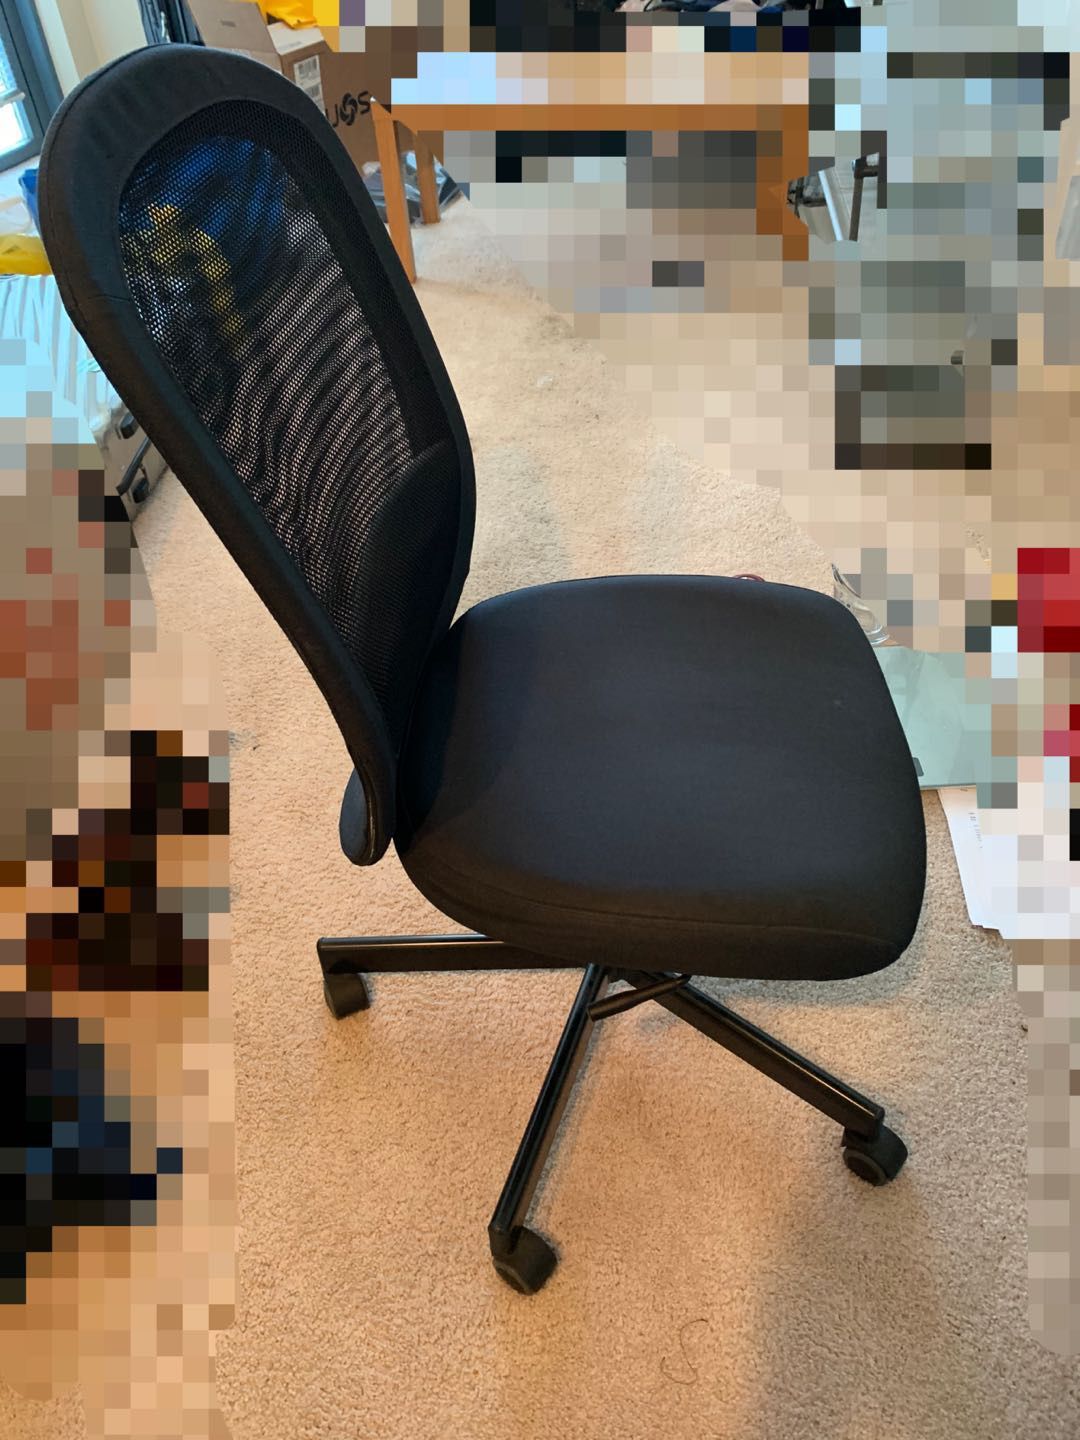 IKEA Office Chair Pending